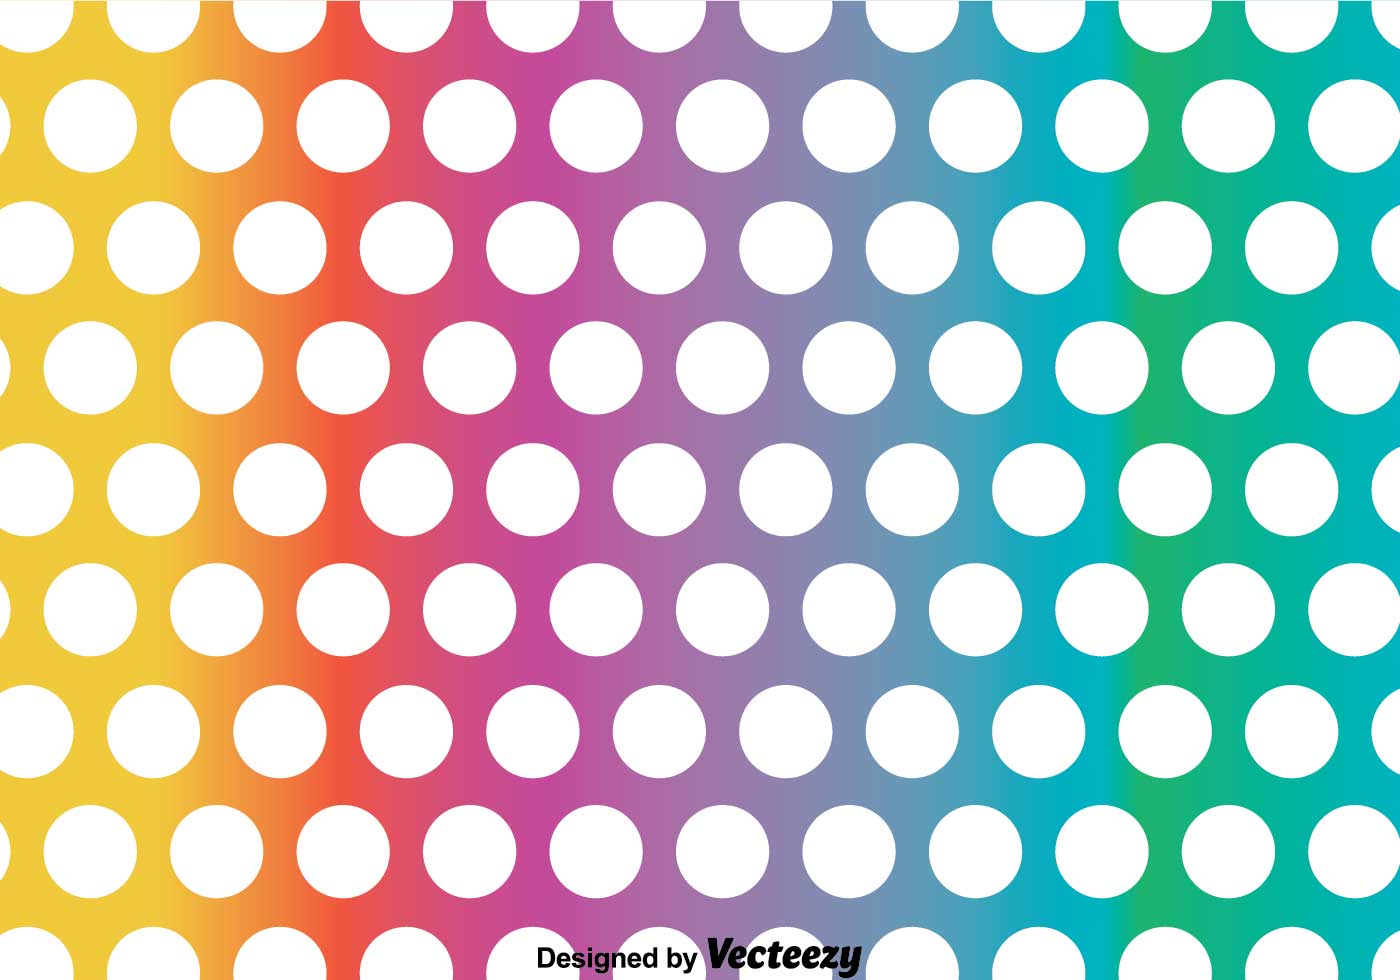 Polka Dot Free Vector Art - (10487 Free Downloads)